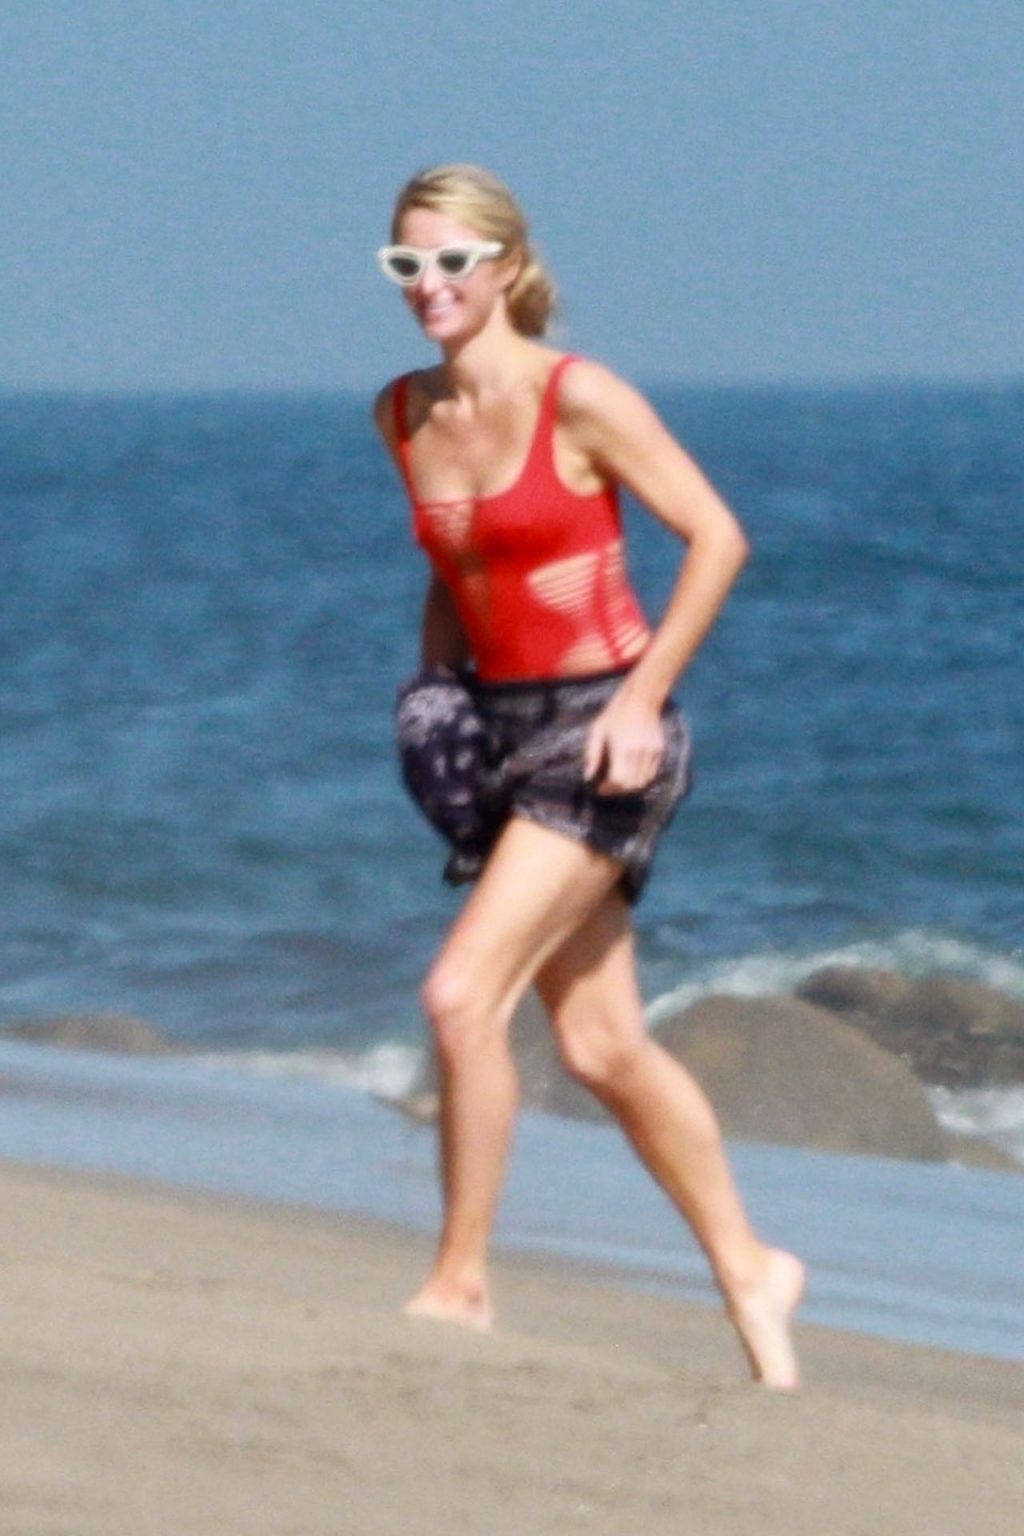 Paris Hilton &amp; Carter Reum Enjoy a Beach Day with Friends (51 Photos)